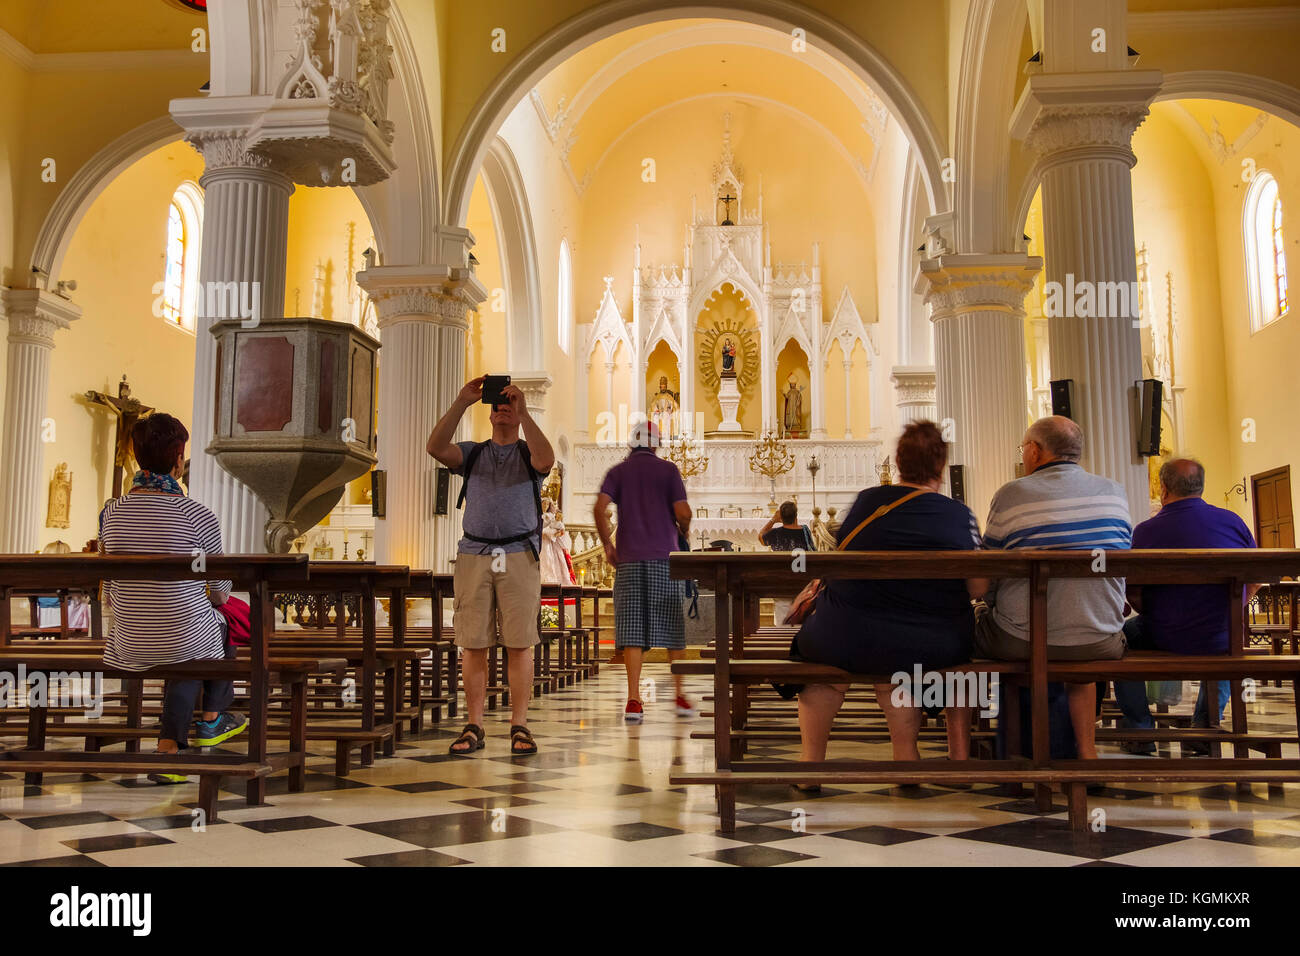 Im Inneren der Kirche, Iglesia de Nuestra Senora de Guadalupe. Teguise, Lanzarote, Kanarische Inseln. Spanien Europa Stockfoto